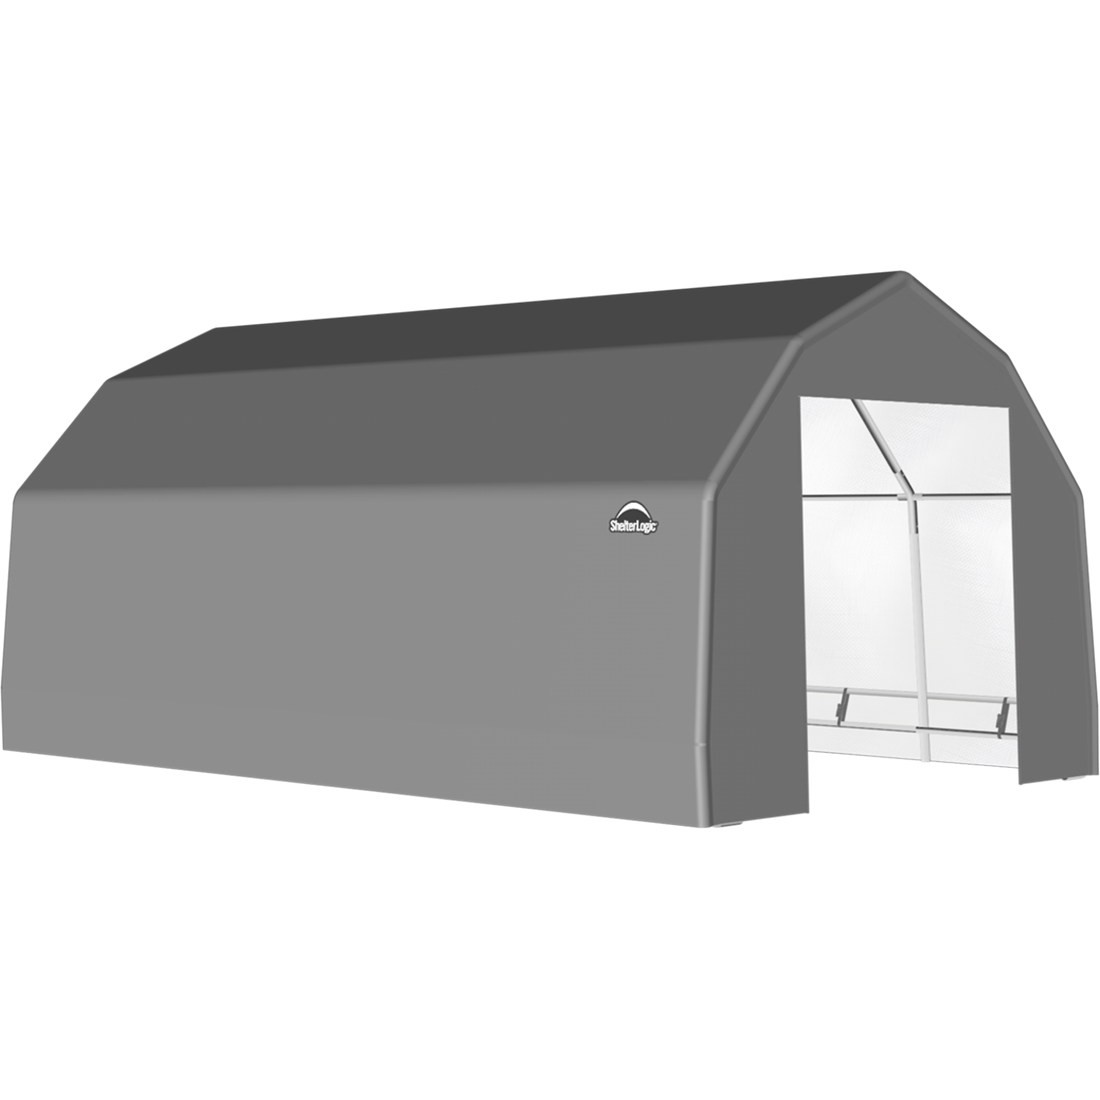 ShelterTech SP Series Barn Shelter, 15 ft. x 28 ft. x 11 ft. Heavy Duty PVC 14.5 oz. Gray